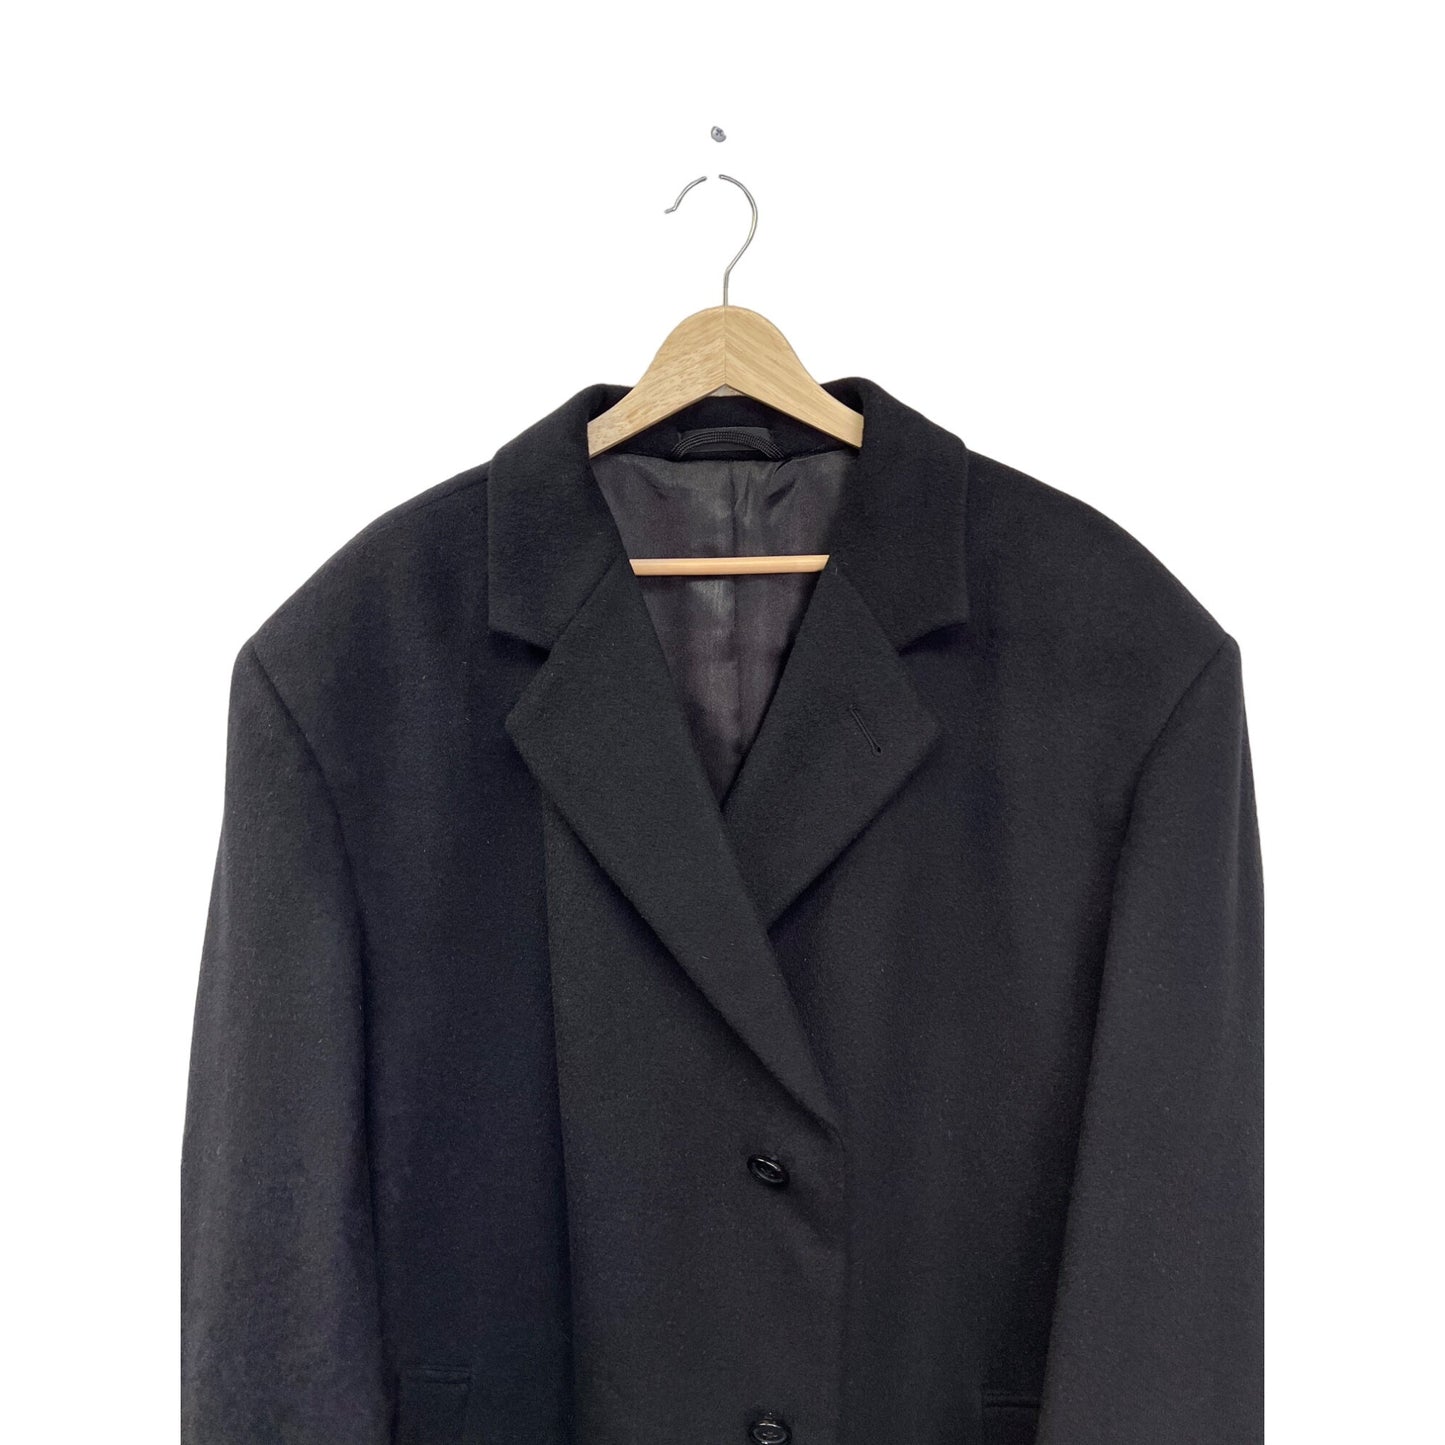 Stafford Black Wool Blend Overcoat